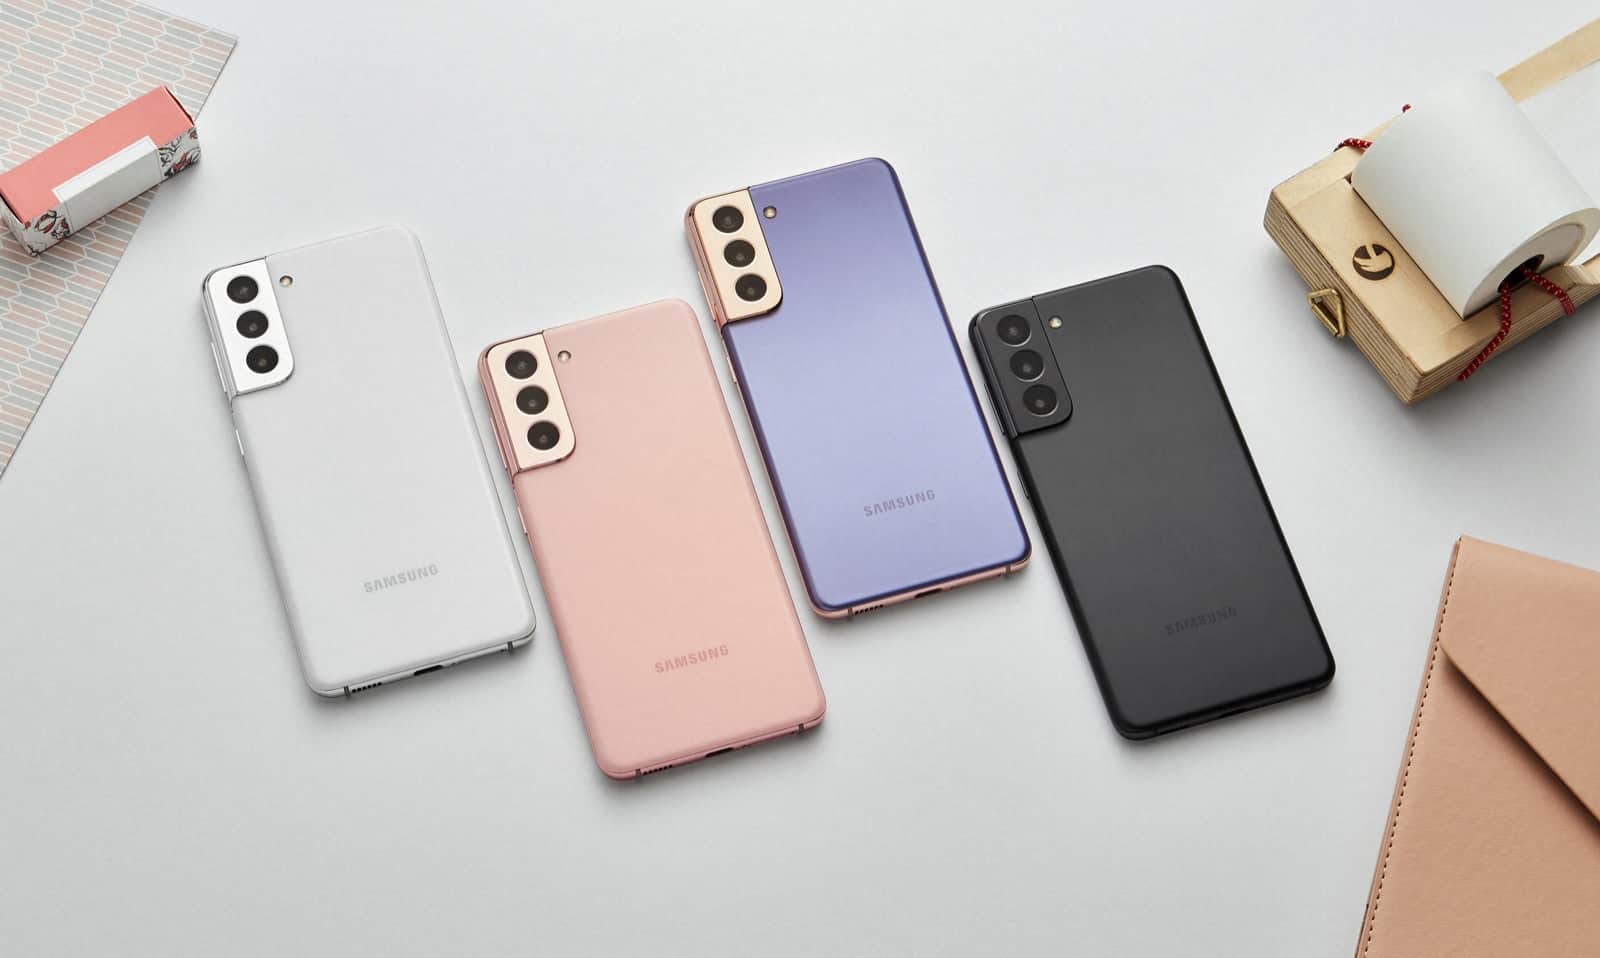 Samsung Galaxy Технические характеристики серии S21